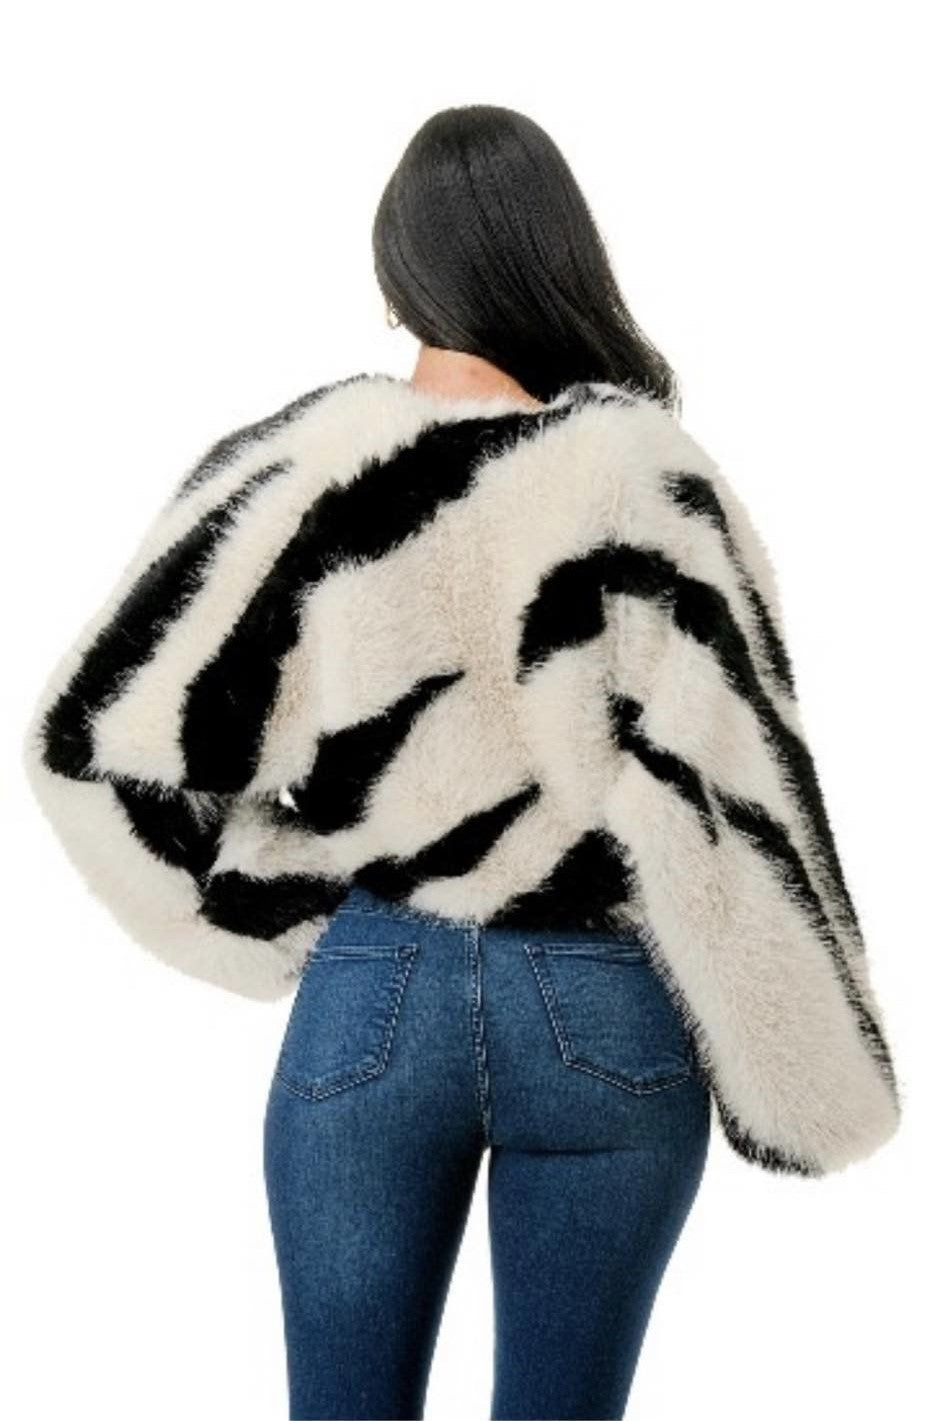 faux fur crop coat - On the Runway Fashion